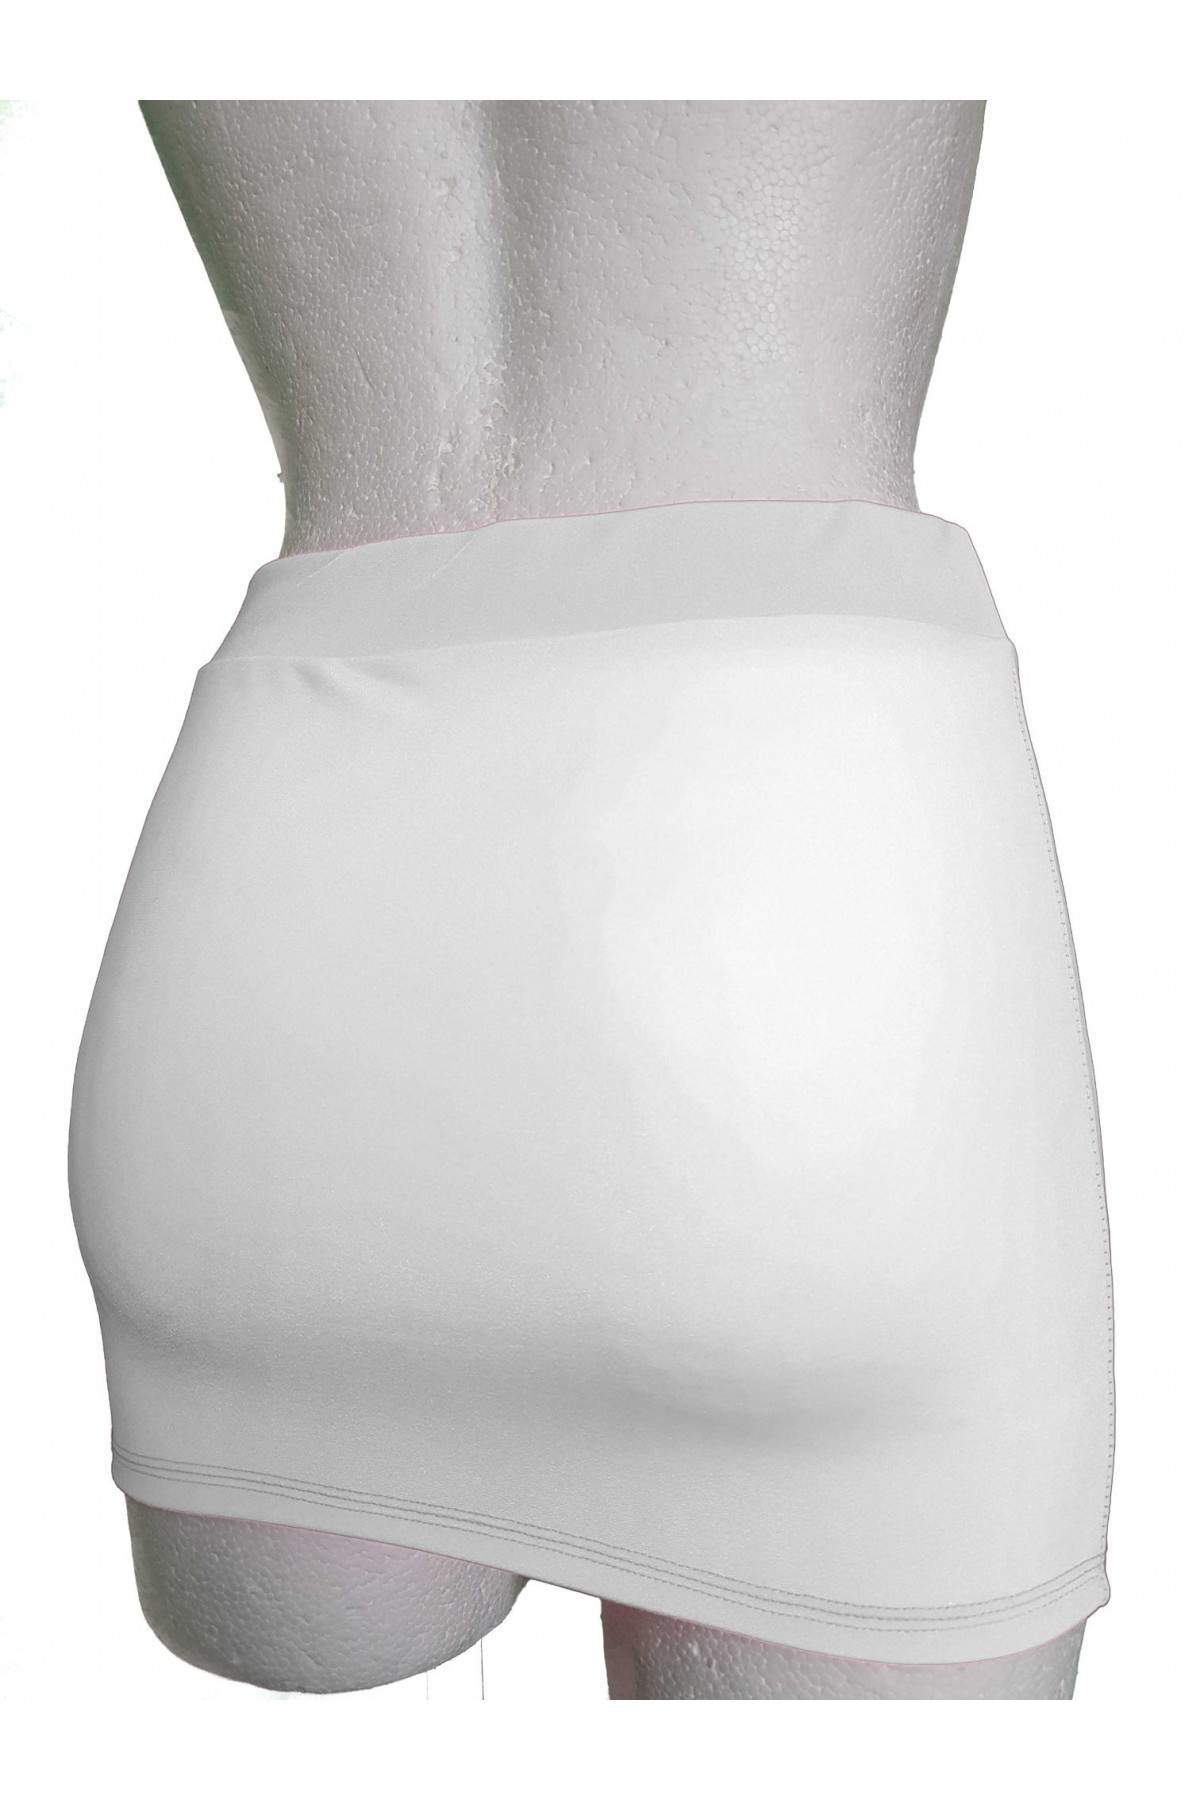 Lycra skirt in 4 colors - 